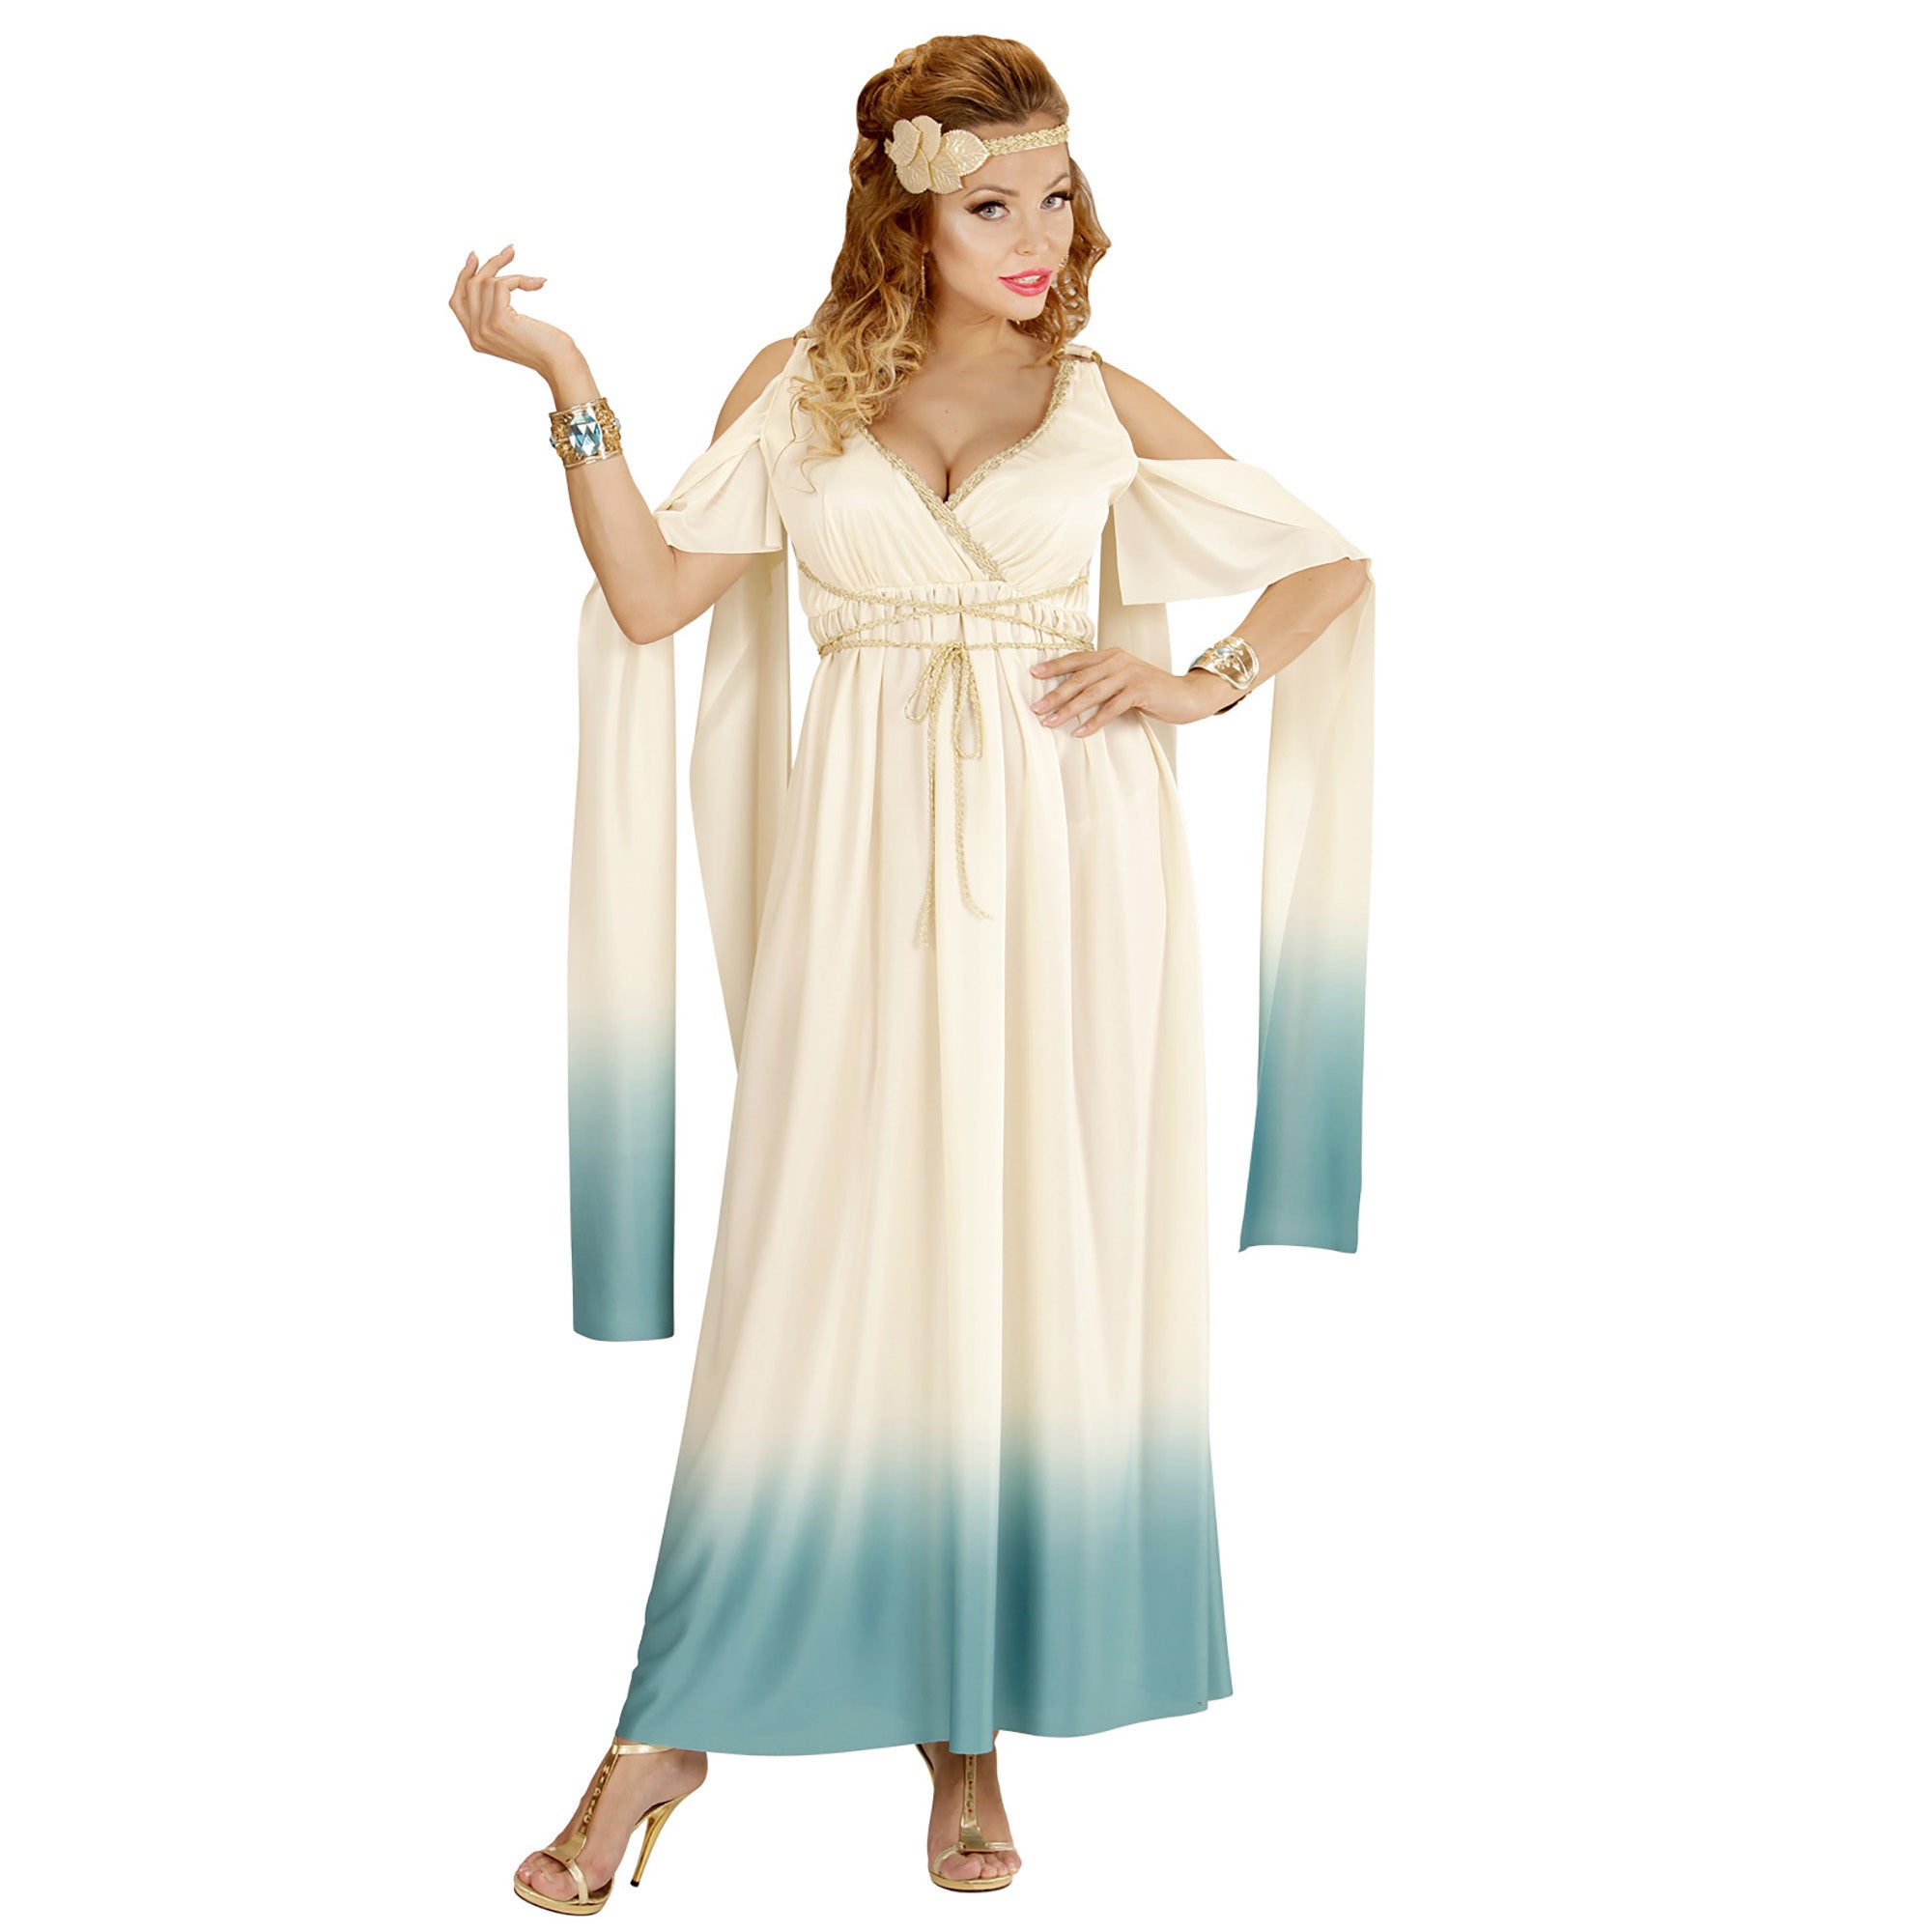 Widmann - Griekse & Romeinse Oudheid Kostuum - Mythische Koningin Van Atlantis - Vrouw - blauw,wit / beige - Small - Carnavalskleding - Verkleedkleding